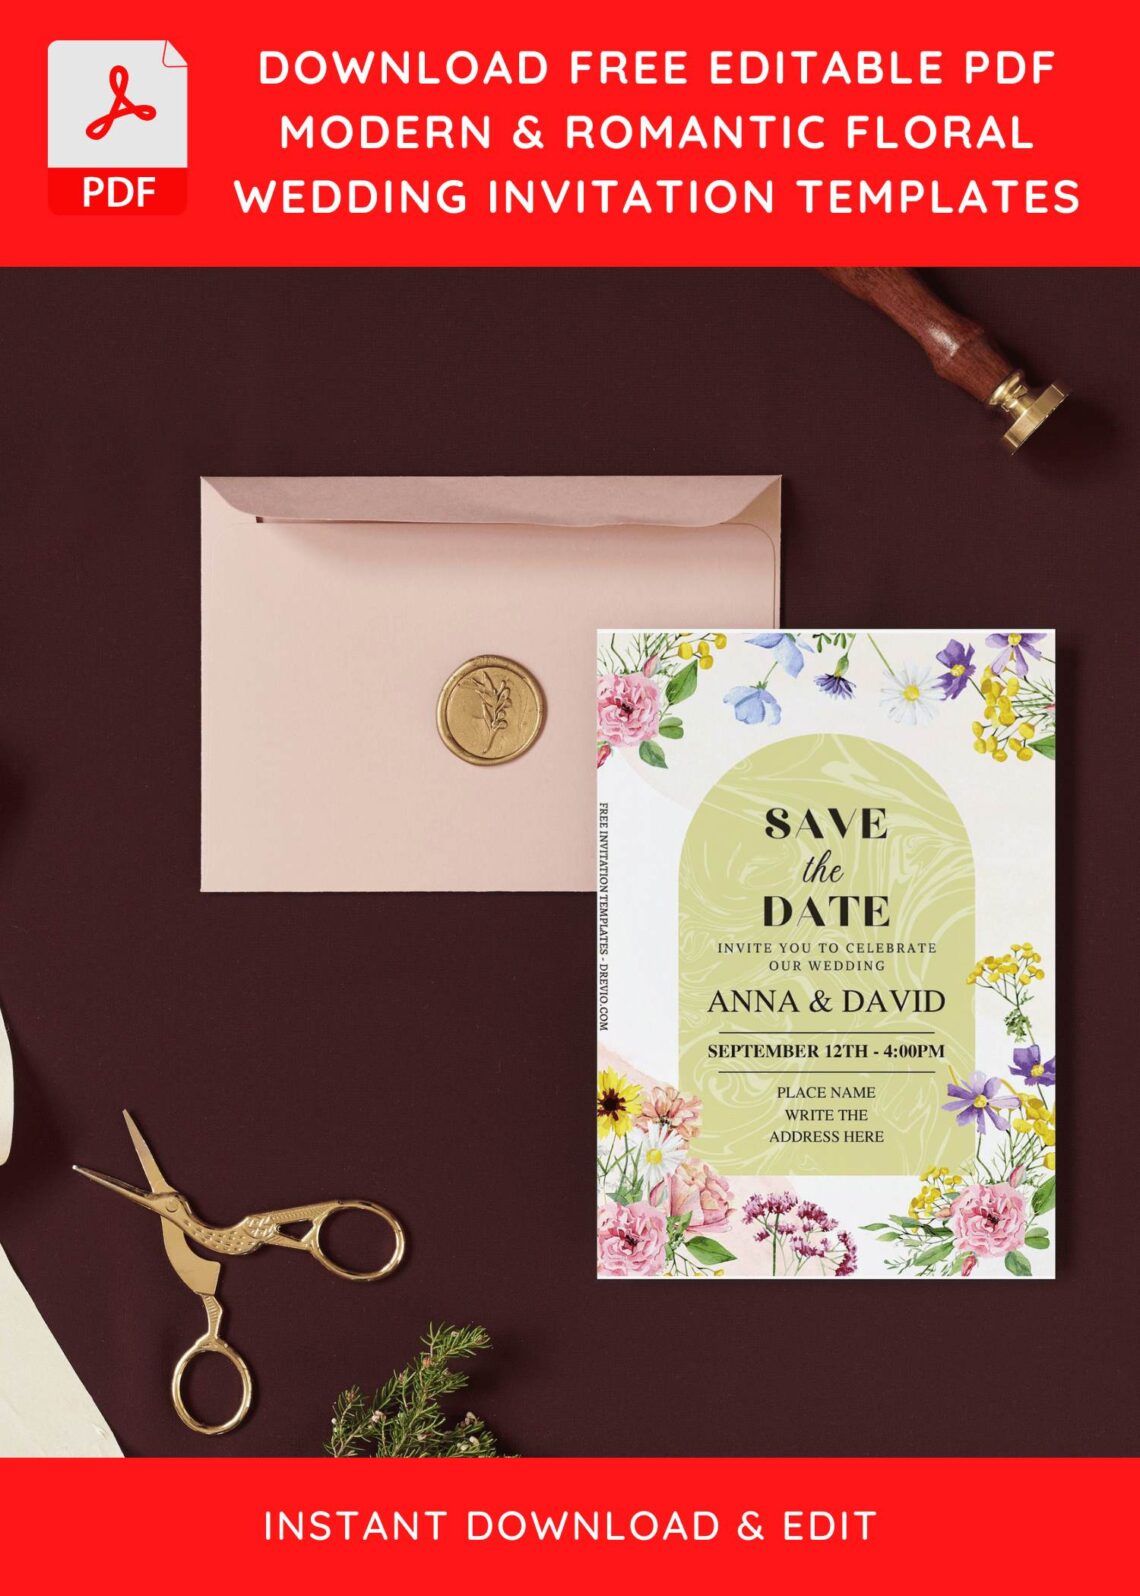 (Free Editable PDF) Modern & Romantic Spring Wedding Invitation Templates I